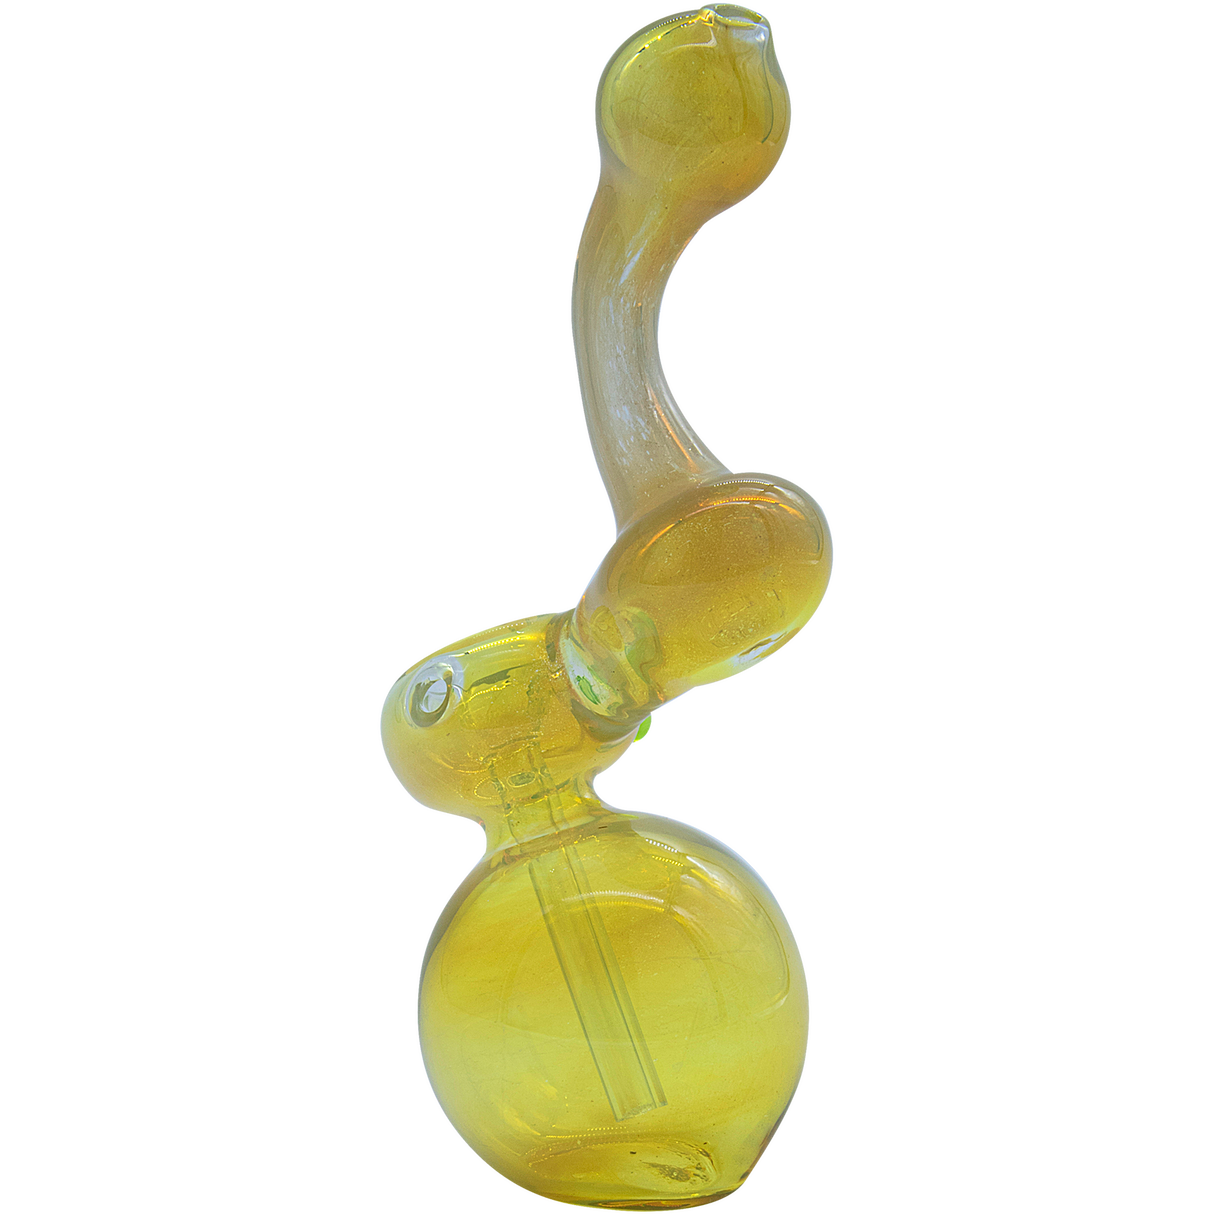 LA Pipes "Silver Sherlock" Fumed Glass Bubbler Pipe in Yellow - Front View